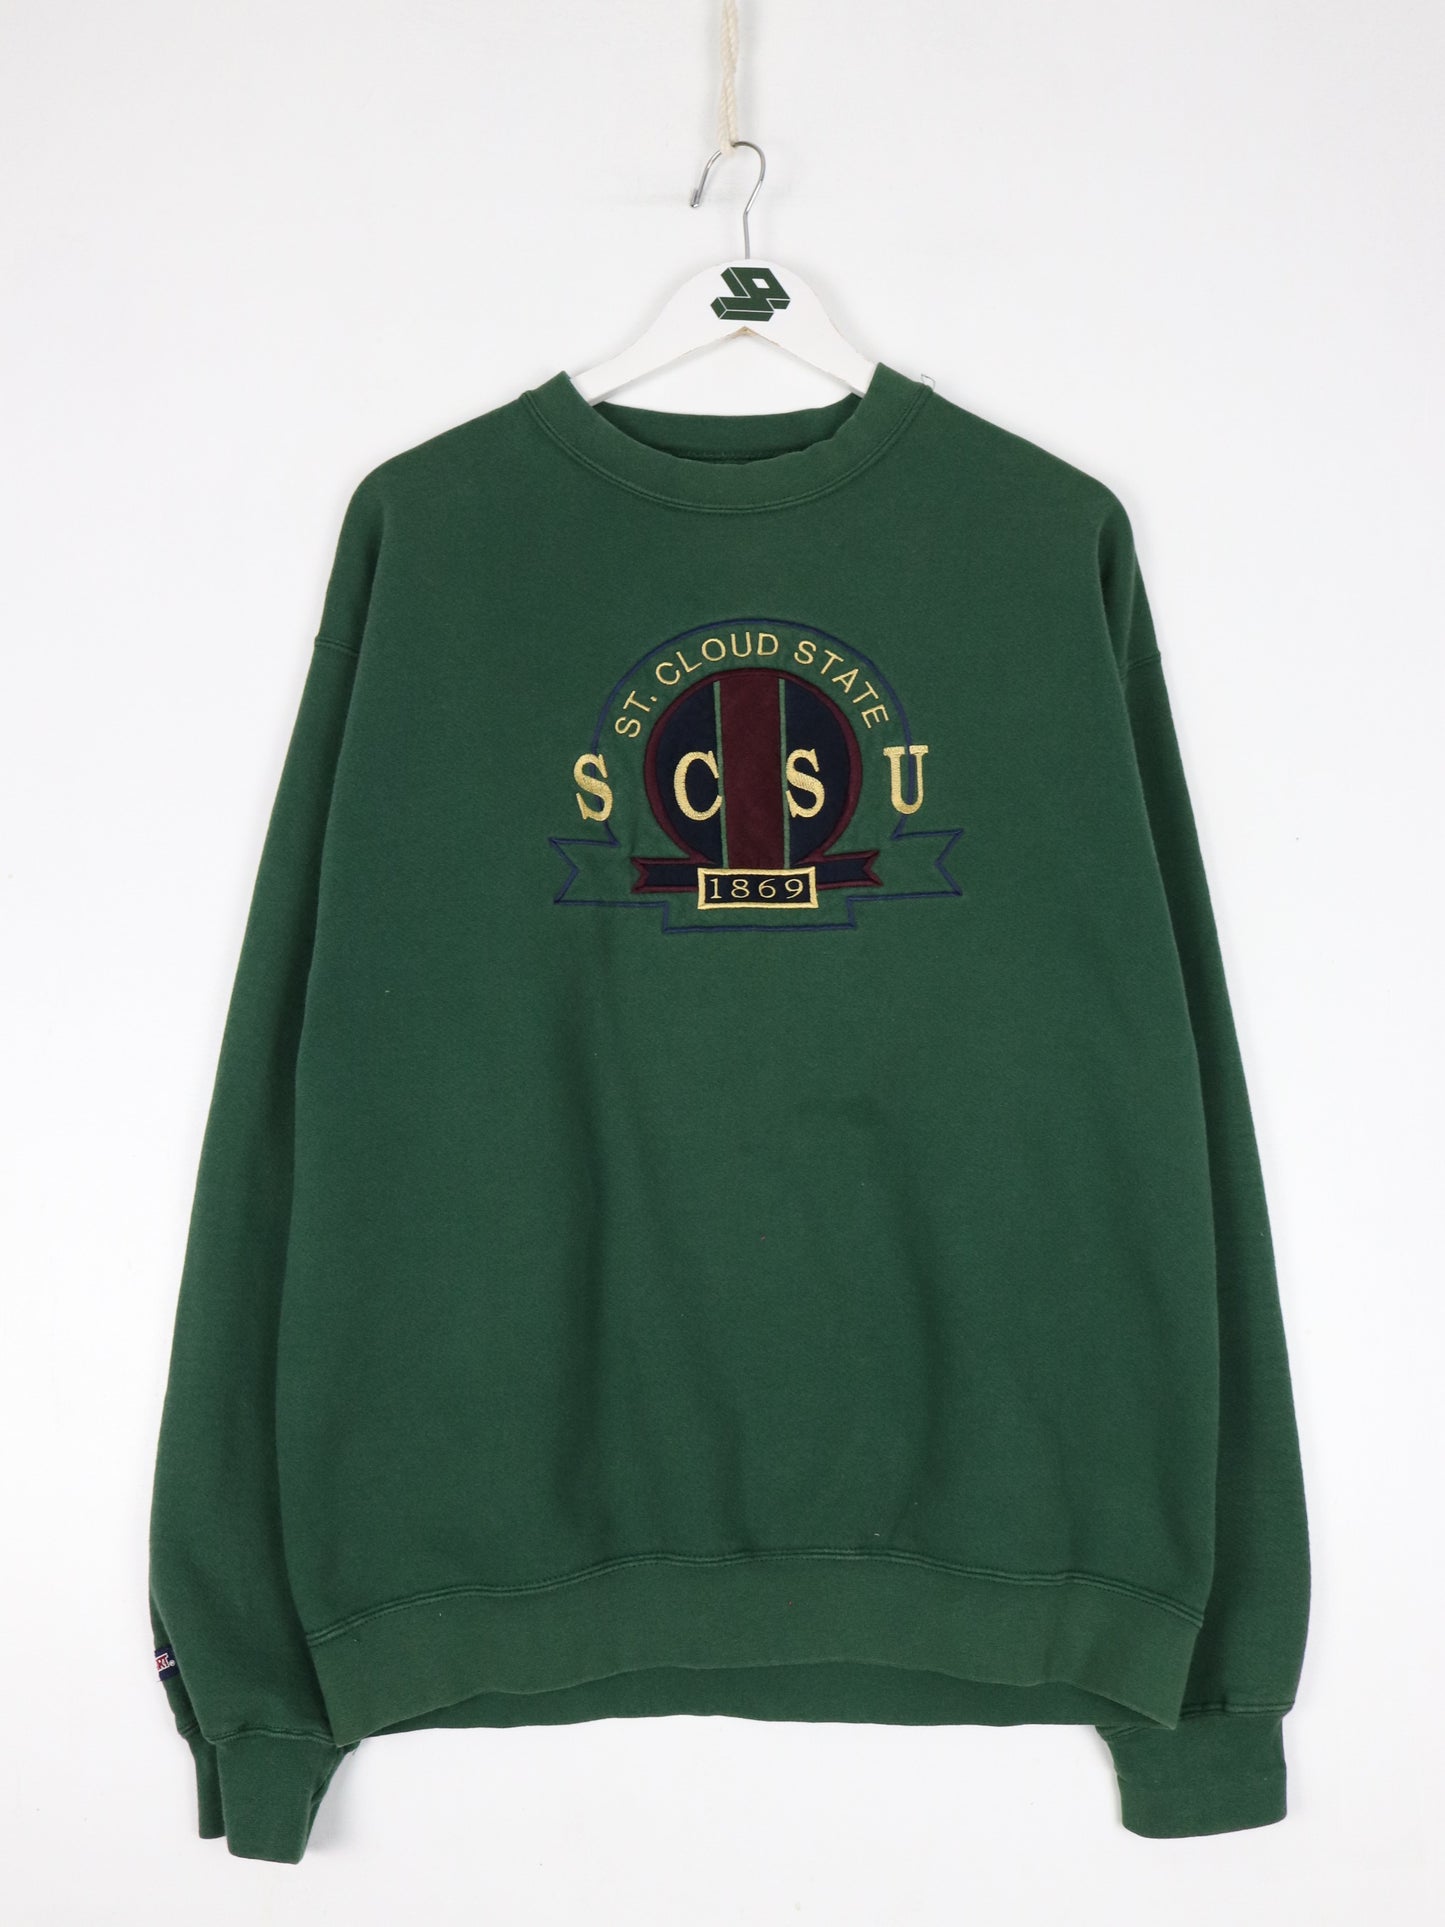 Vintage St. Cloud State Sweatshirt Mens Large Green College